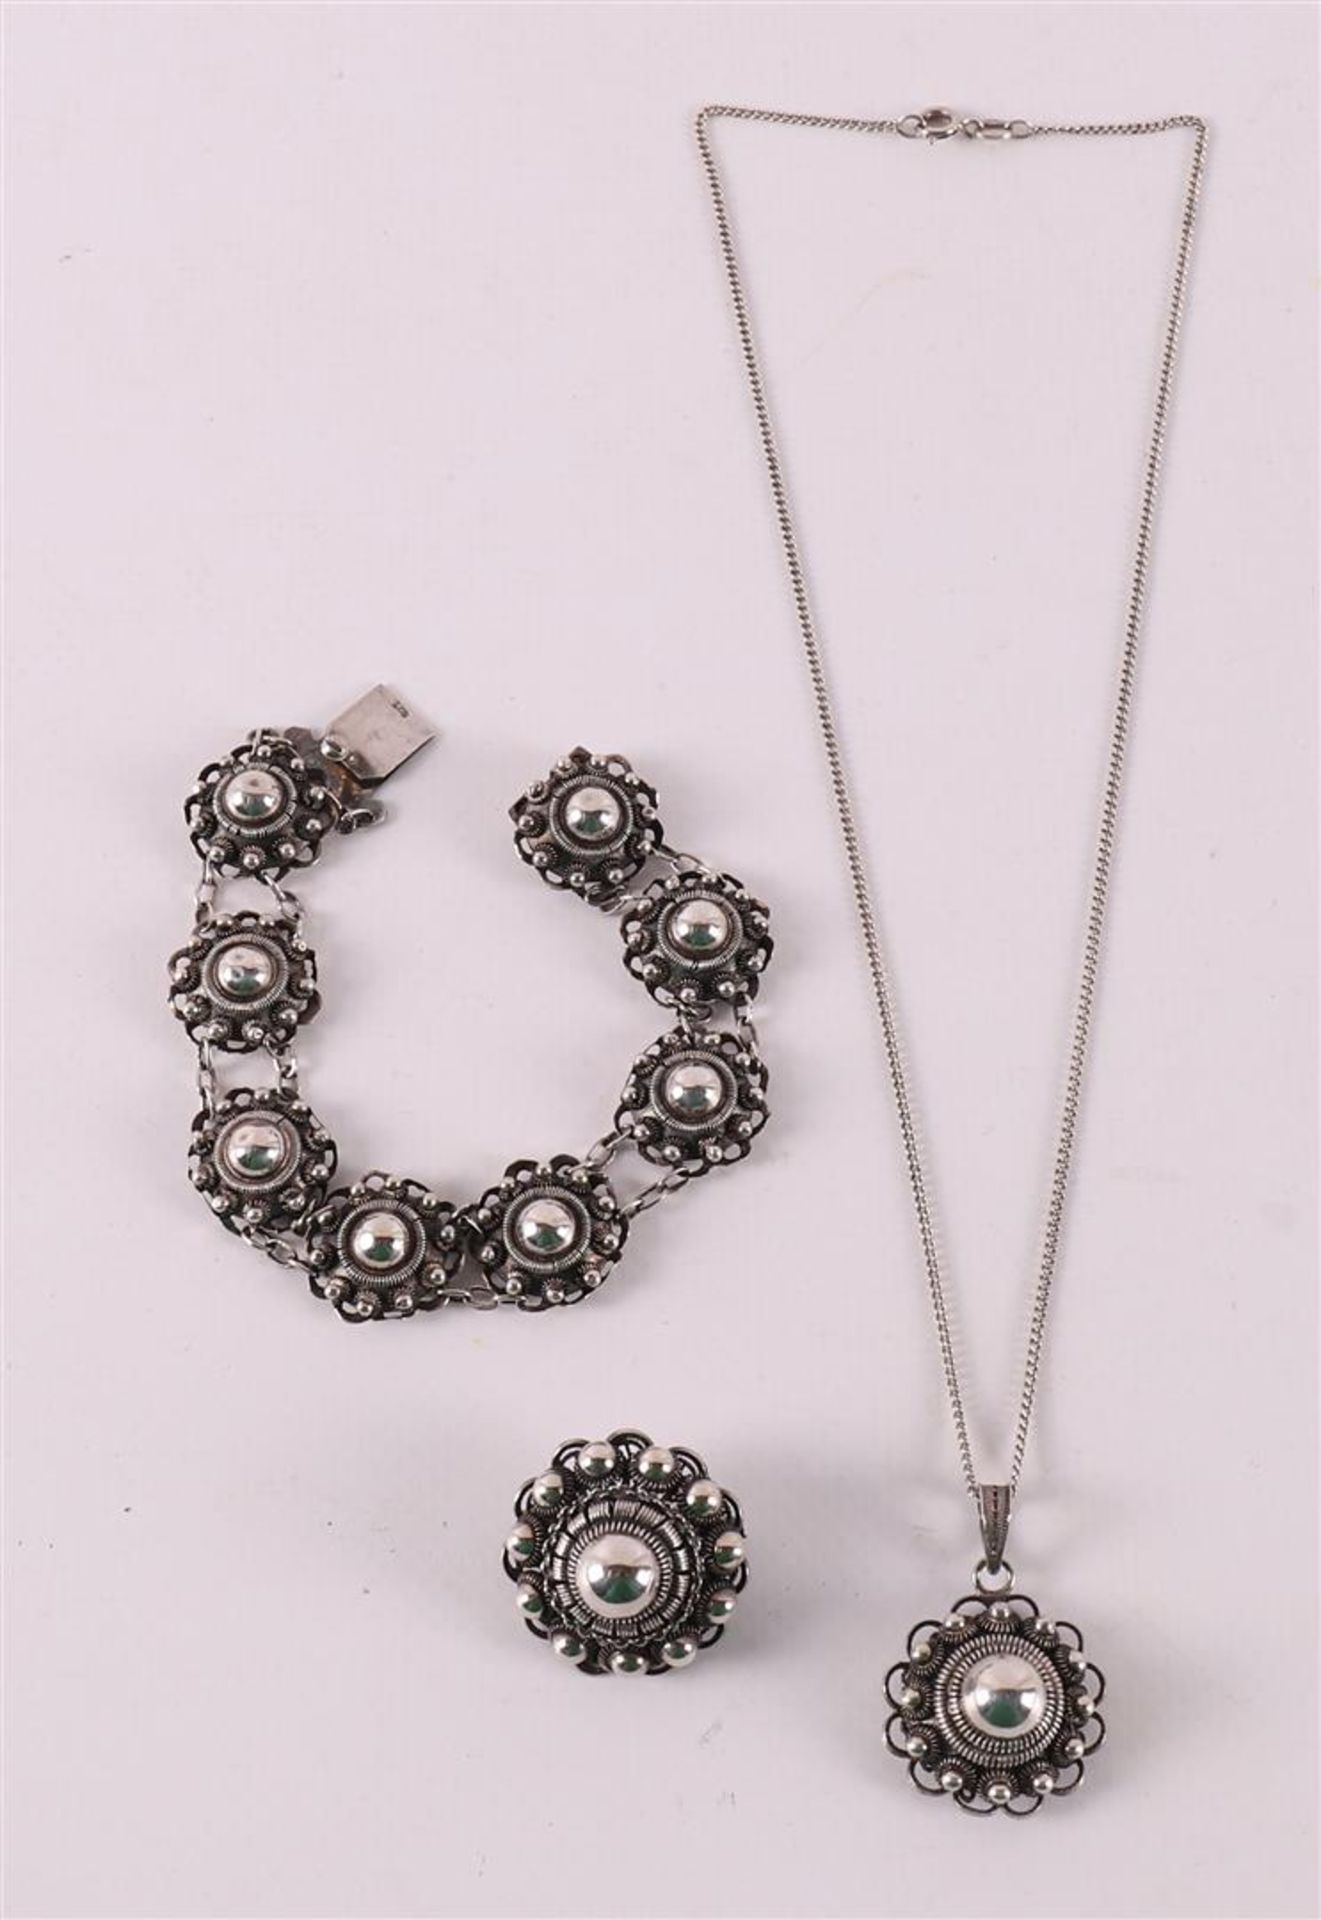 A silver Zeeland knot bracelet, brooch and pendant on a necklace.